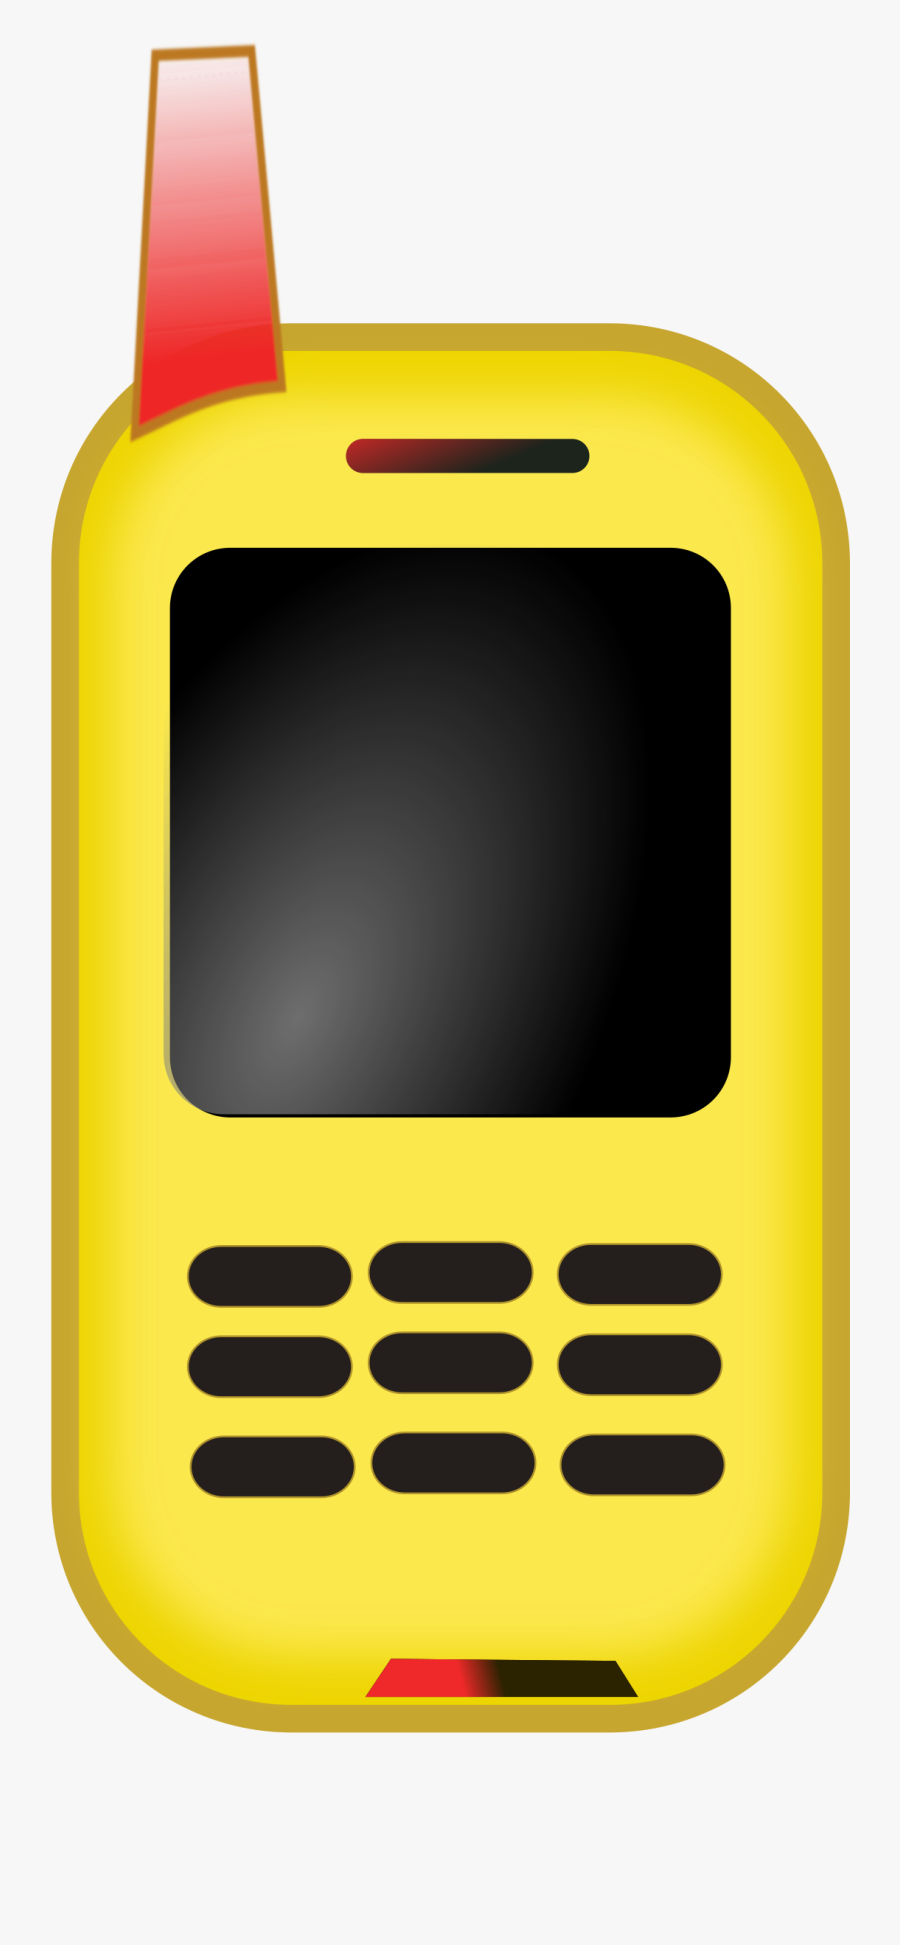 Telephone Clipart Yellow - Mobile Phone Clip Art, Transparent Clipart